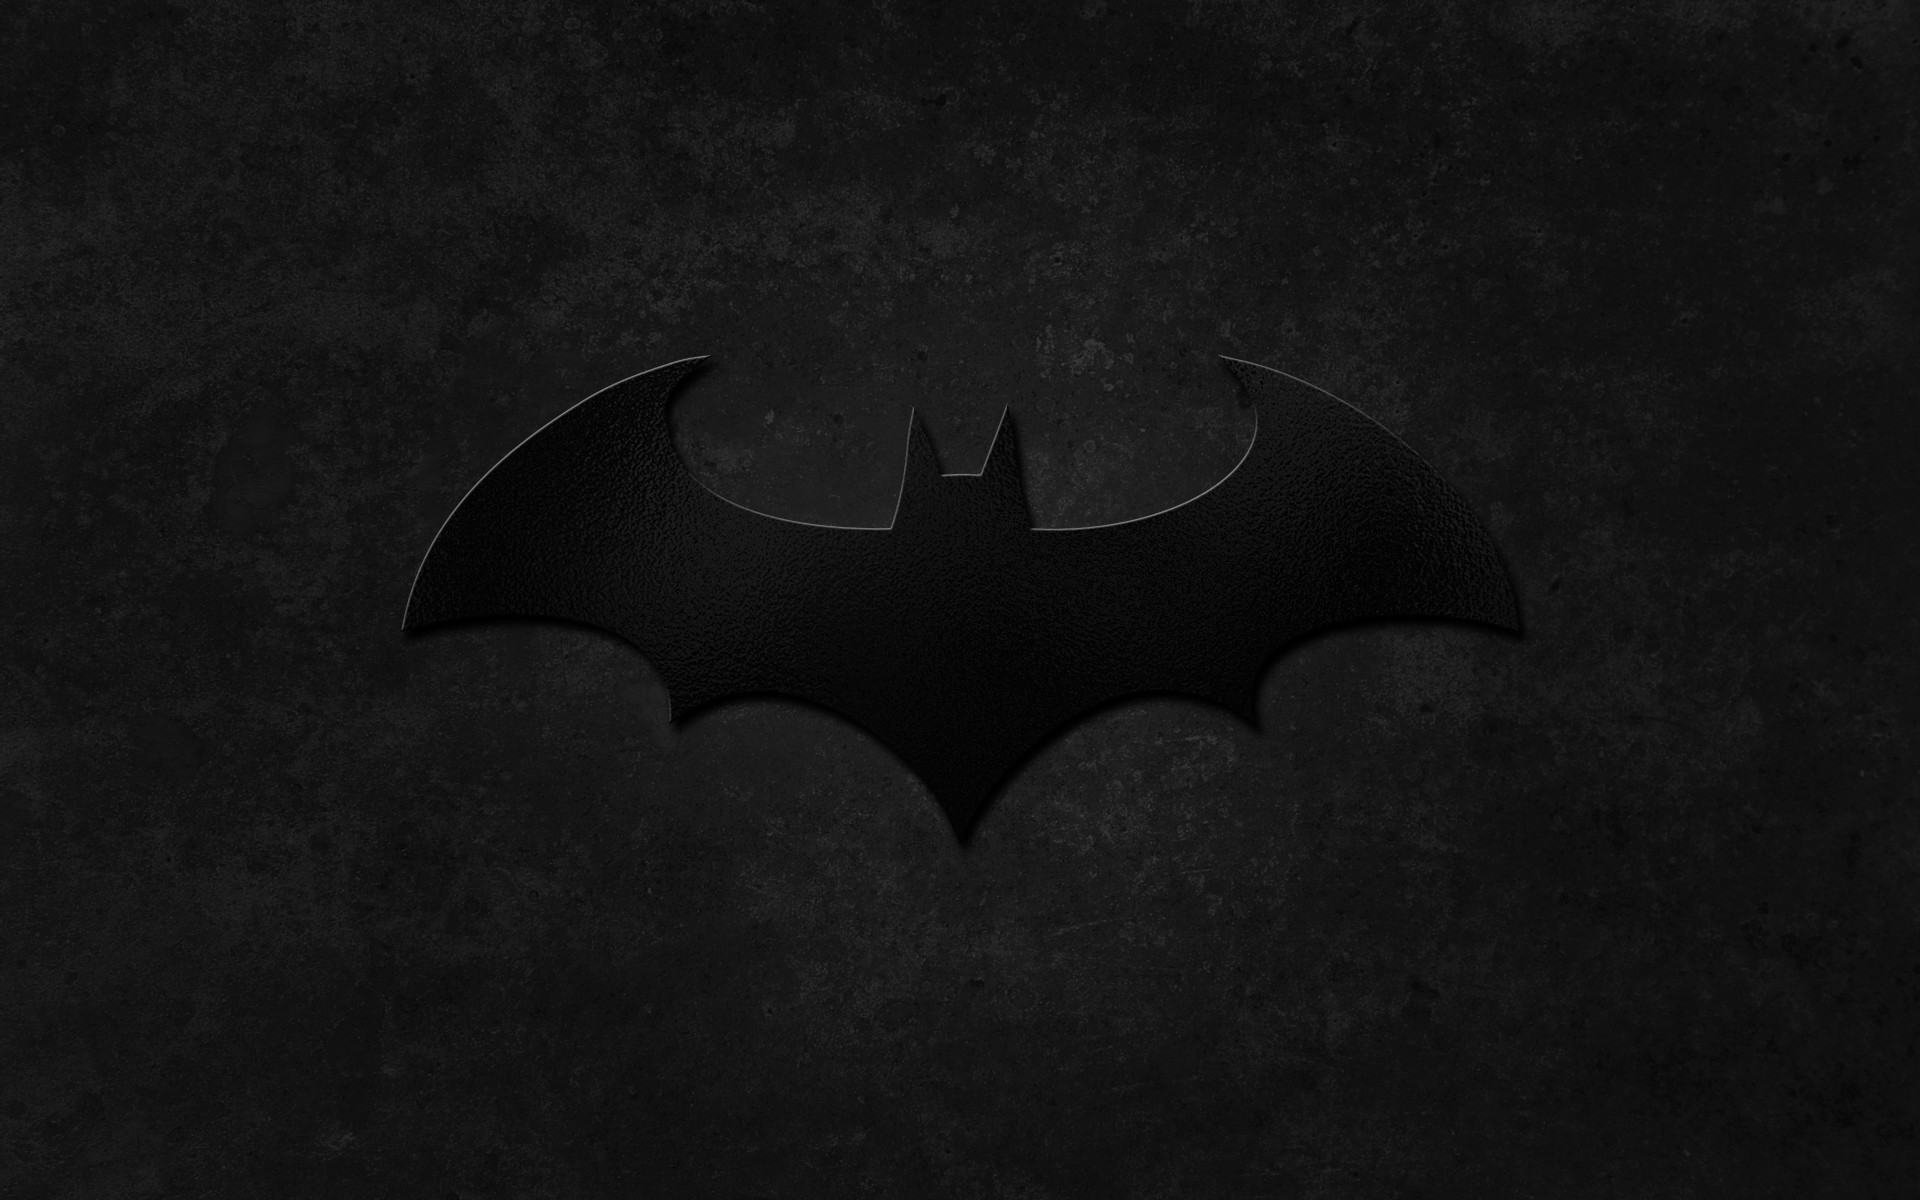 1920x1200 Batman Logo wallpapers For Free Download HD p | HD Wallpapers | Pinterest |  Wallpaper, Logos and Hd wallpaper